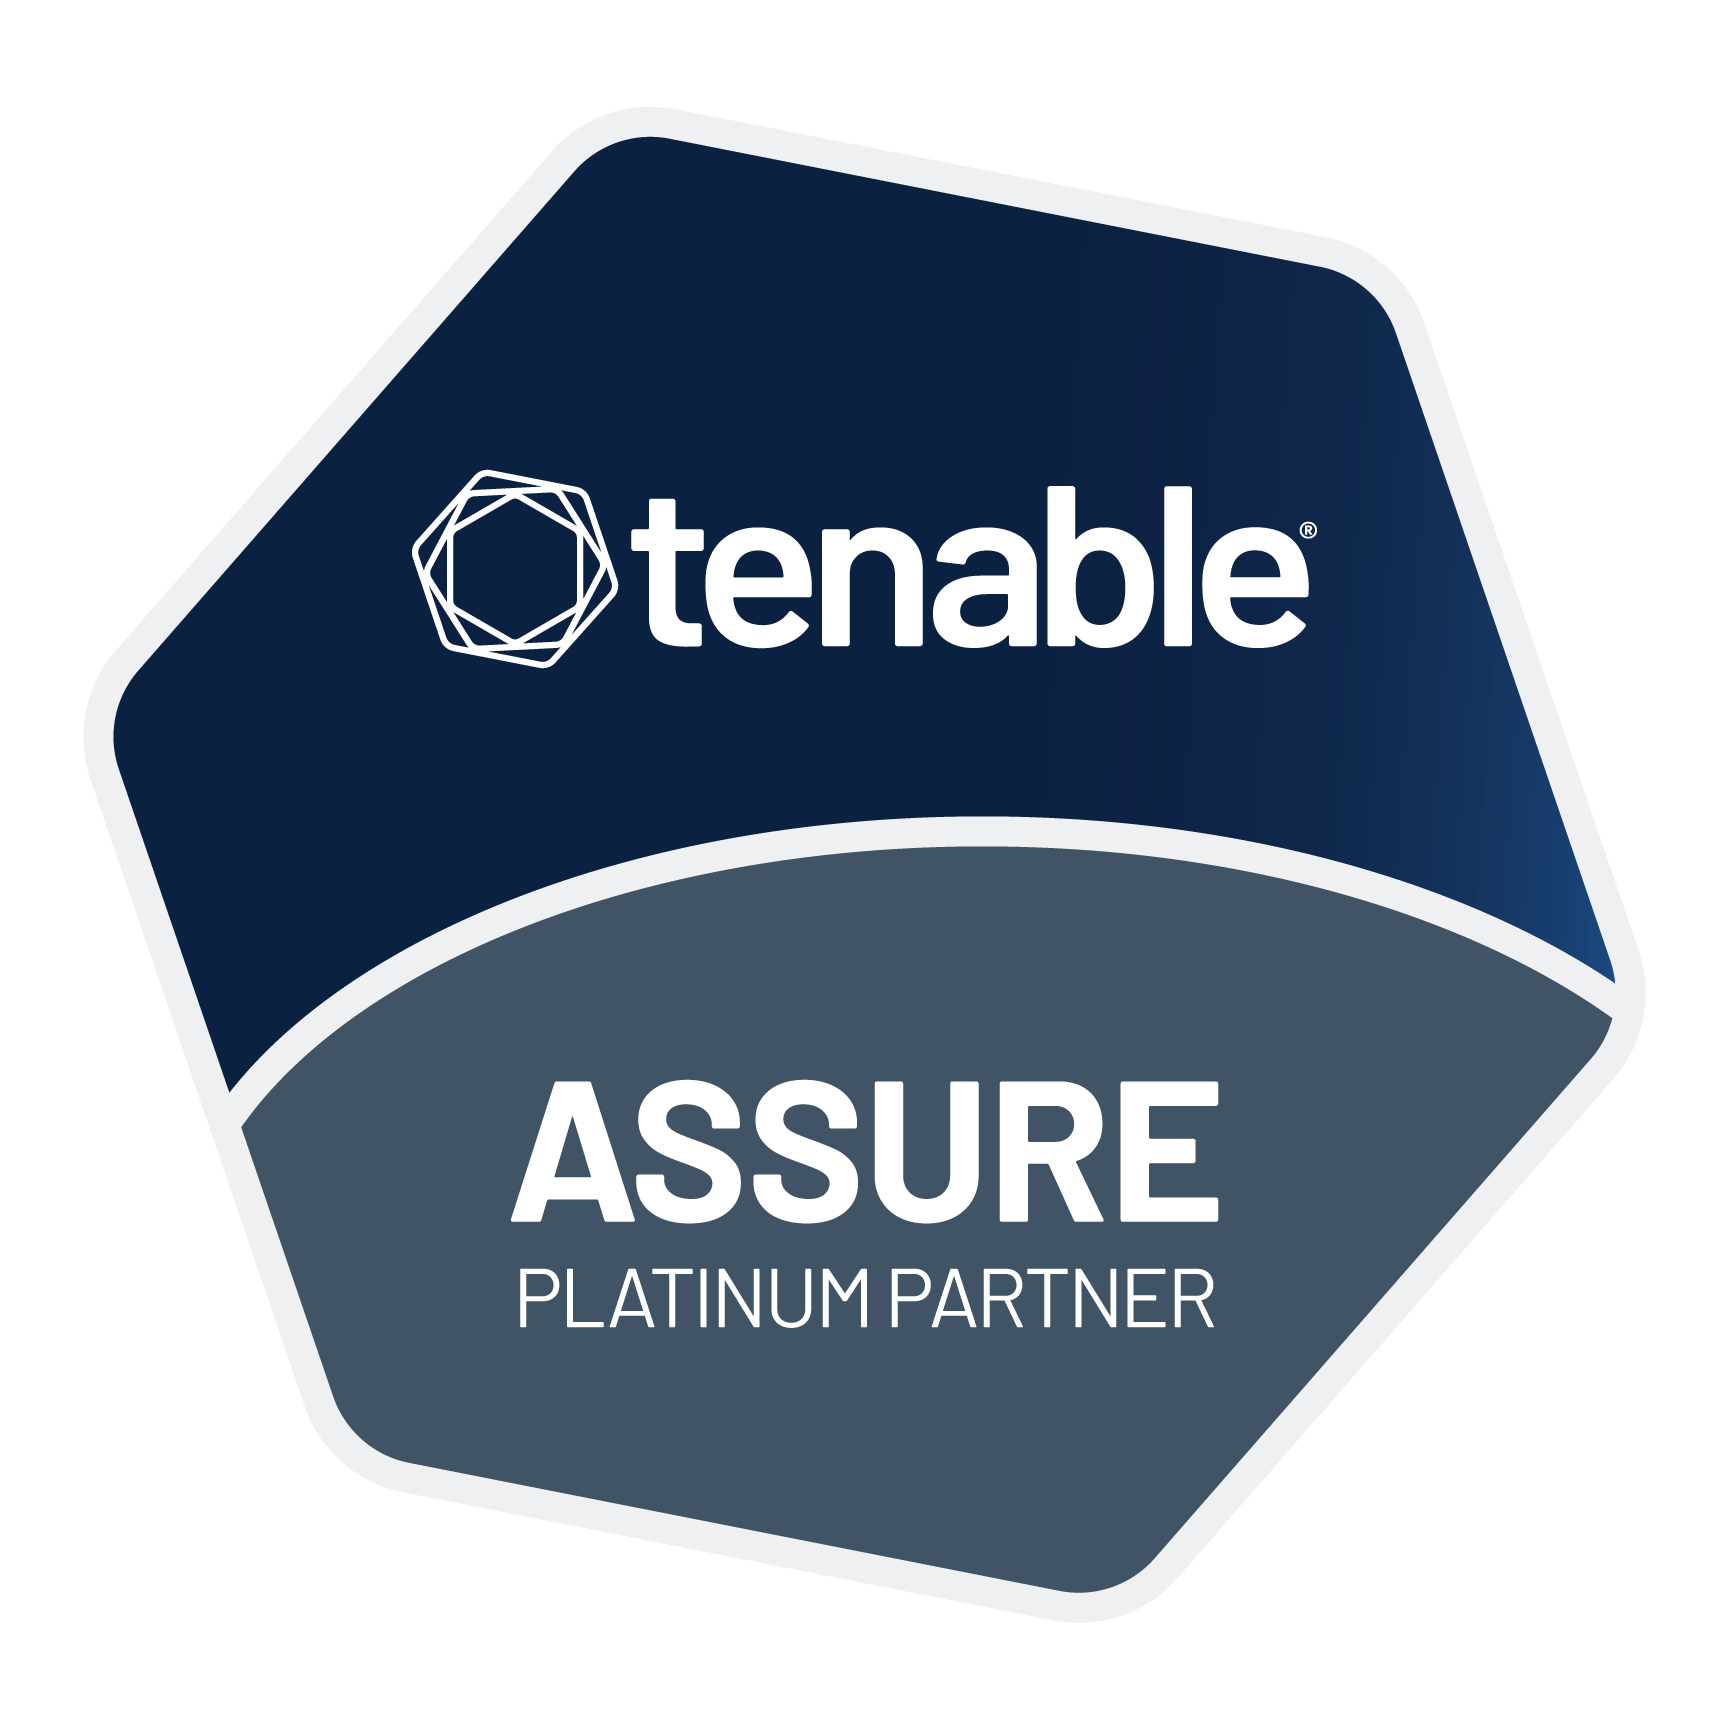 Tenable Assure Platinum Partner Badge